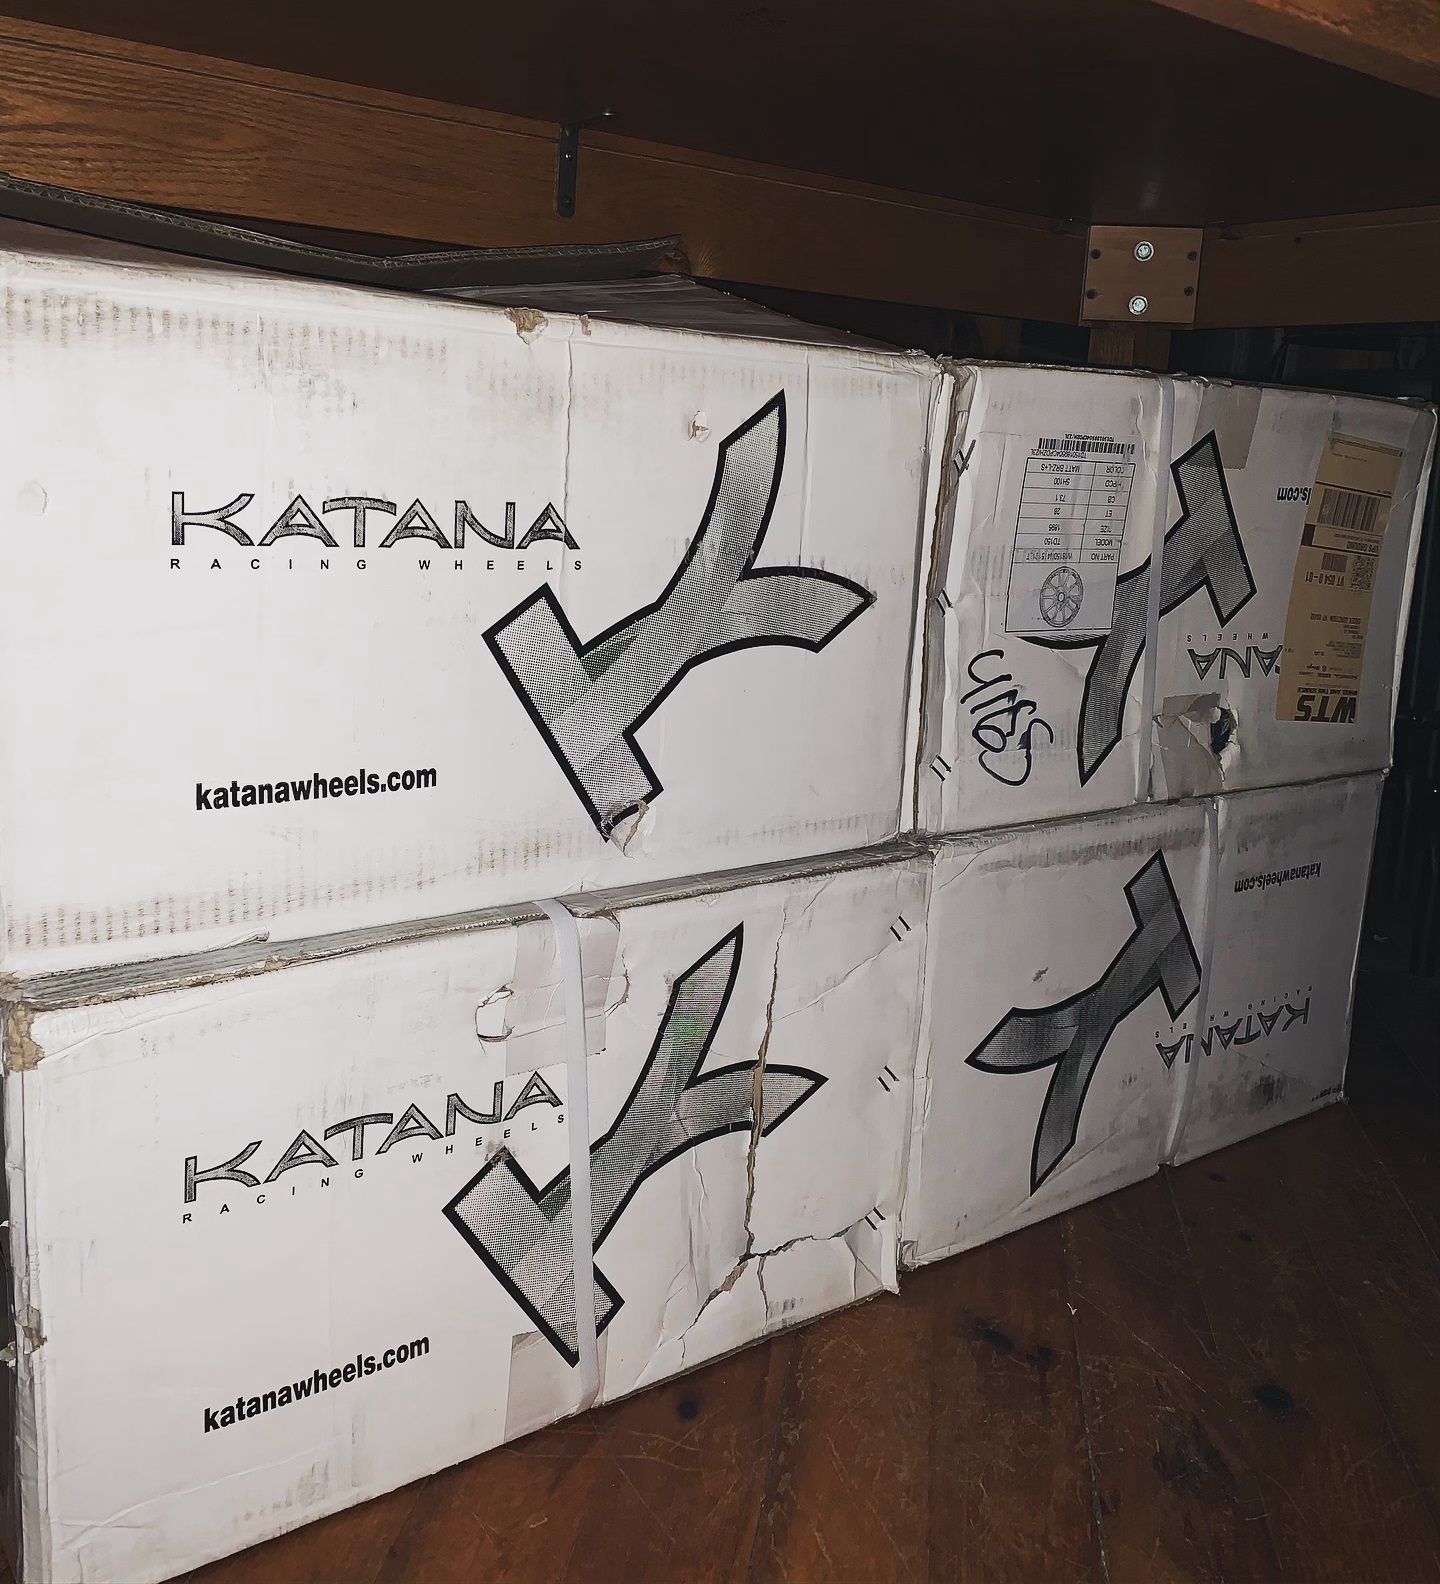 Katana Wheels in box